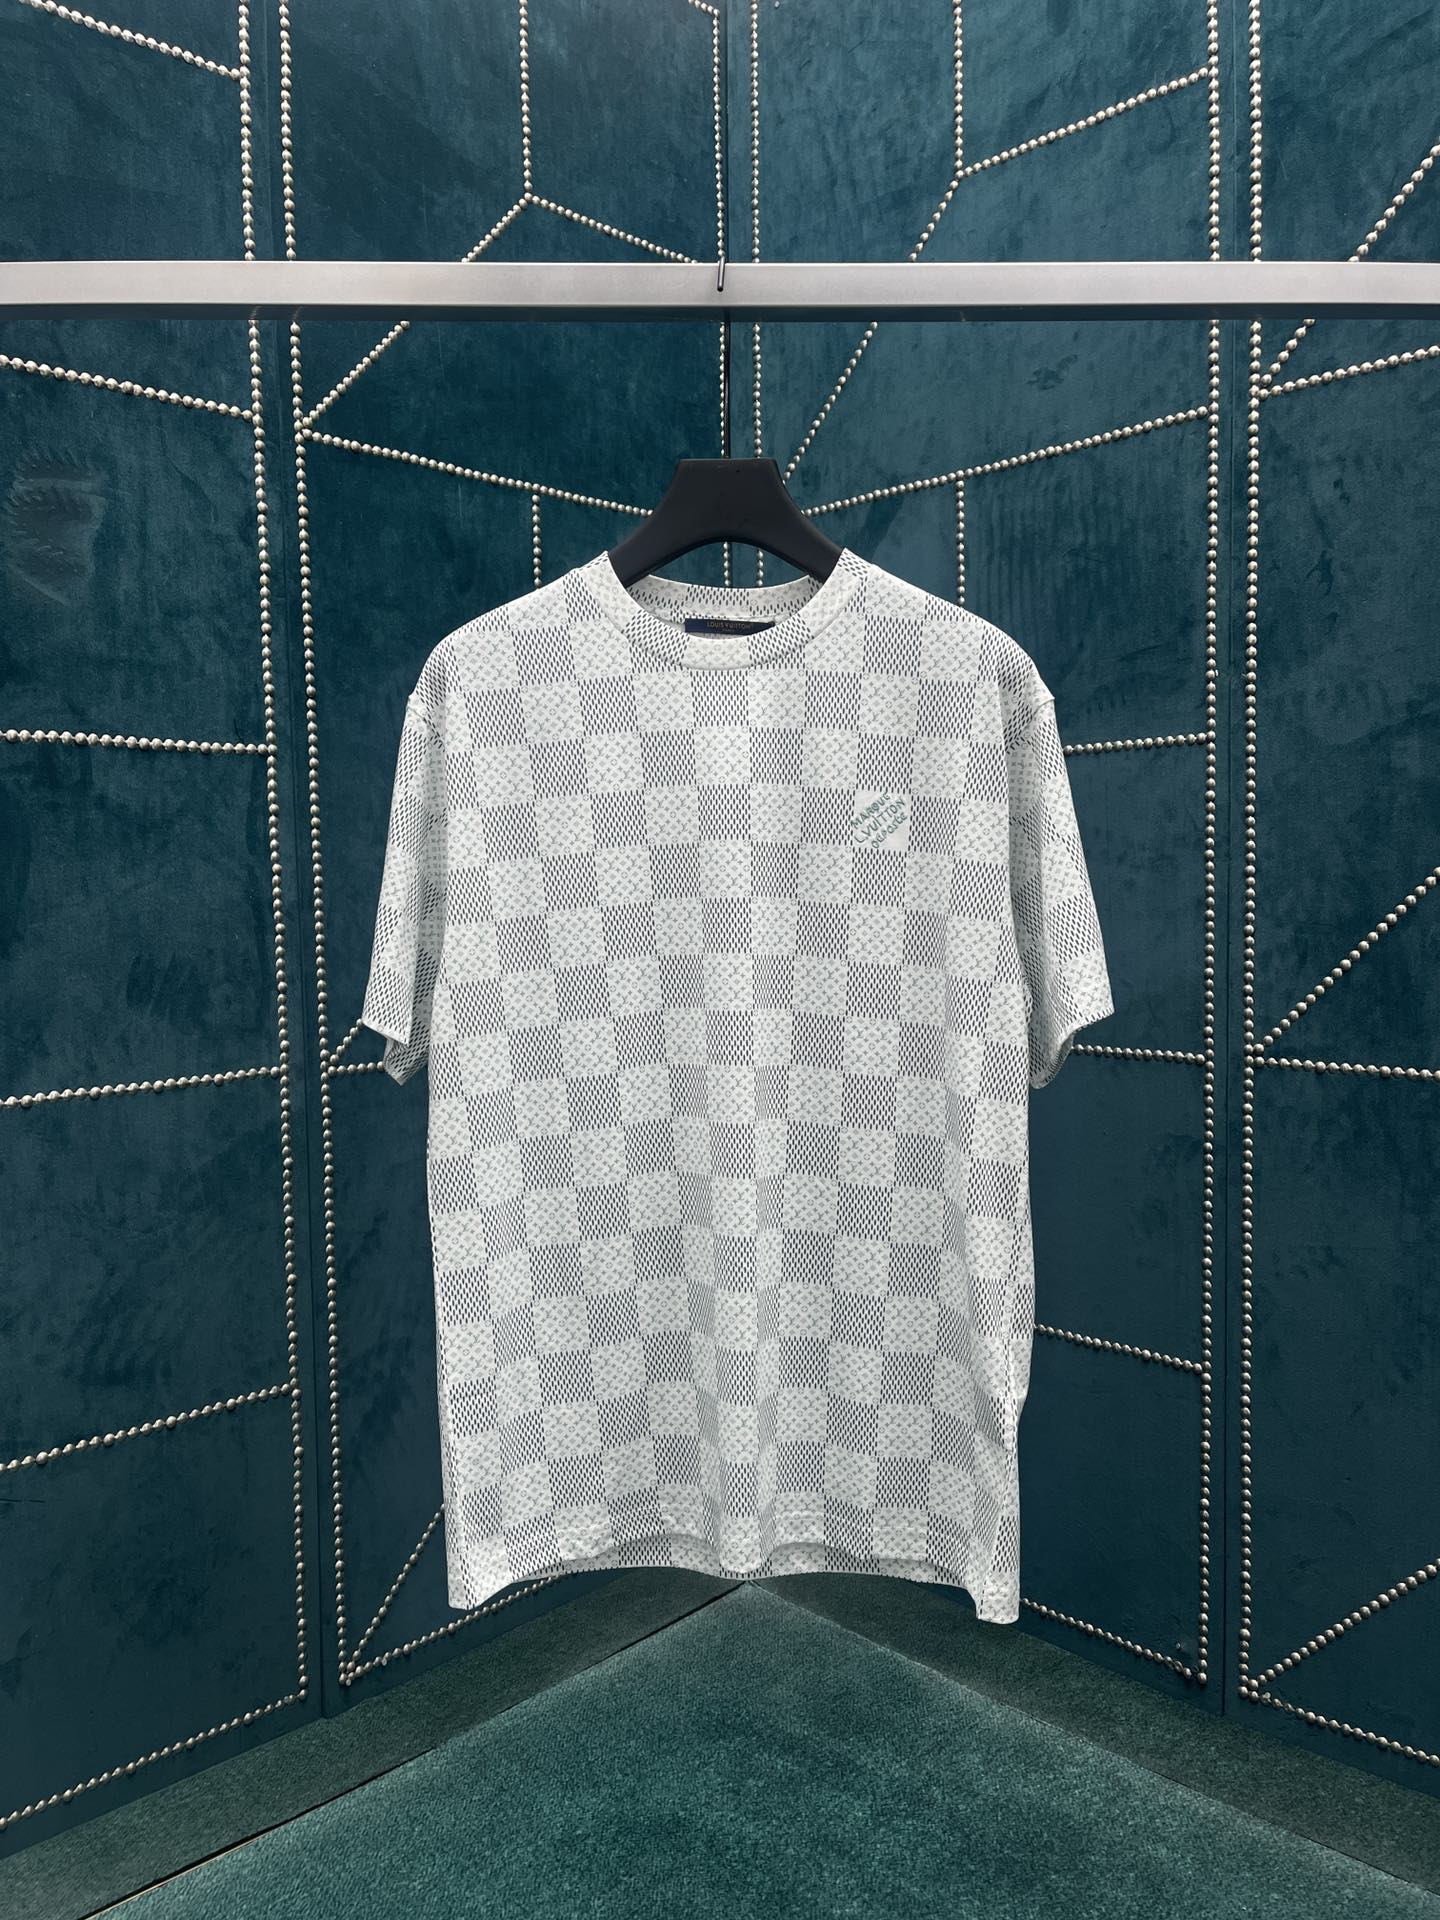 Louis Vuitton Kleding T-Shirt Borduurwerk Unisex Katoen Lente/Zomercollectie